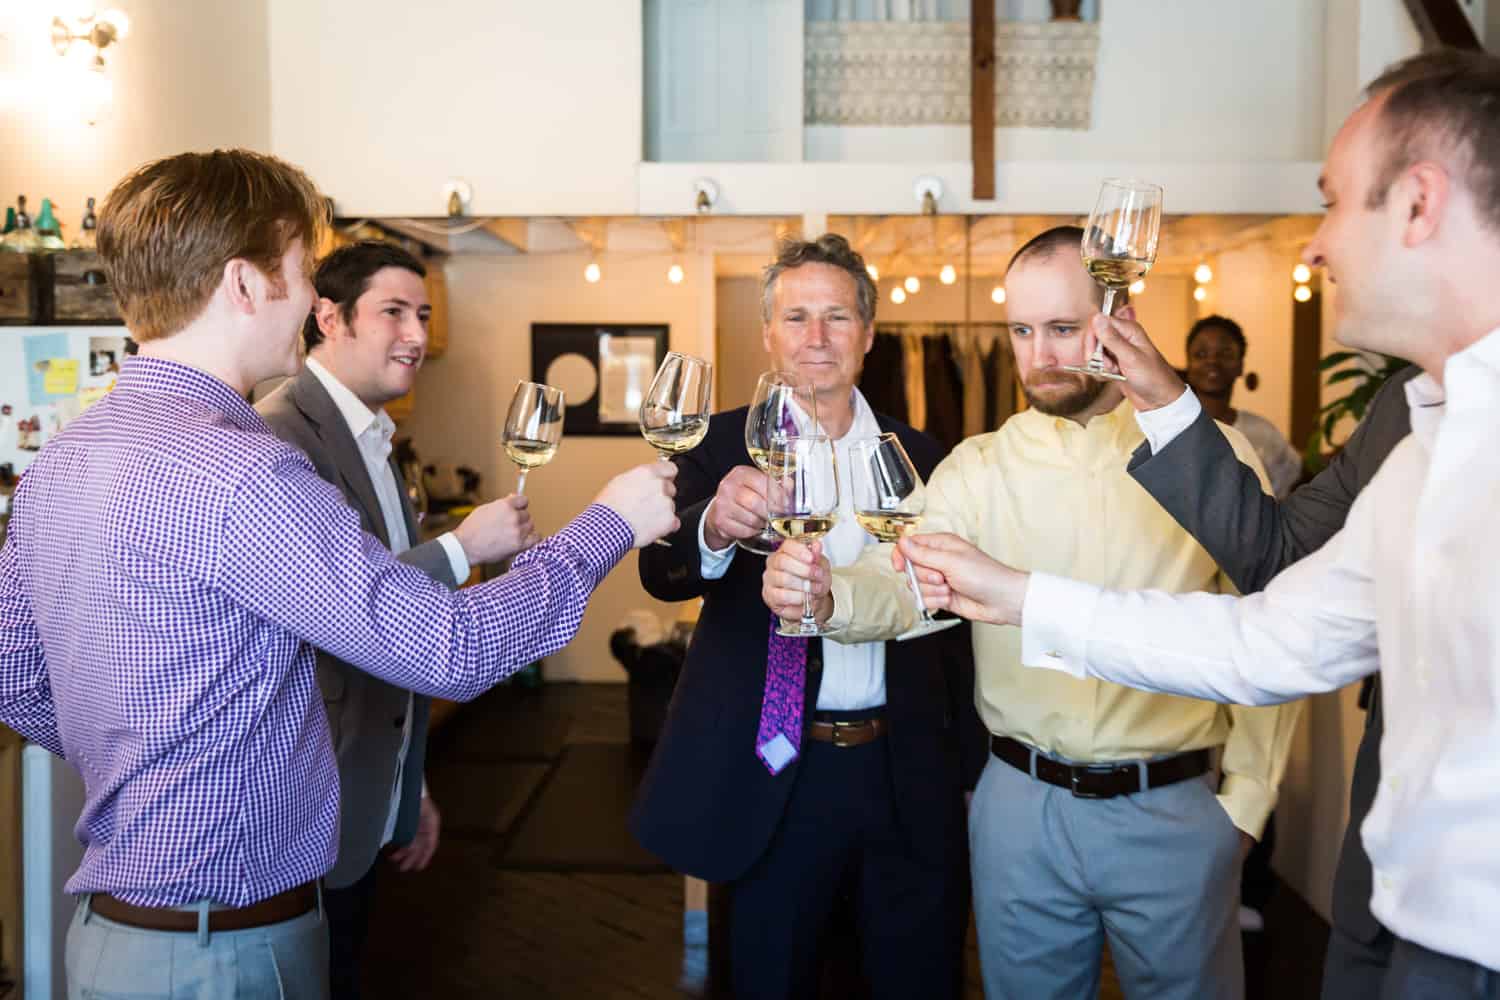 Groom and groomsmen toasting glasses before wedding